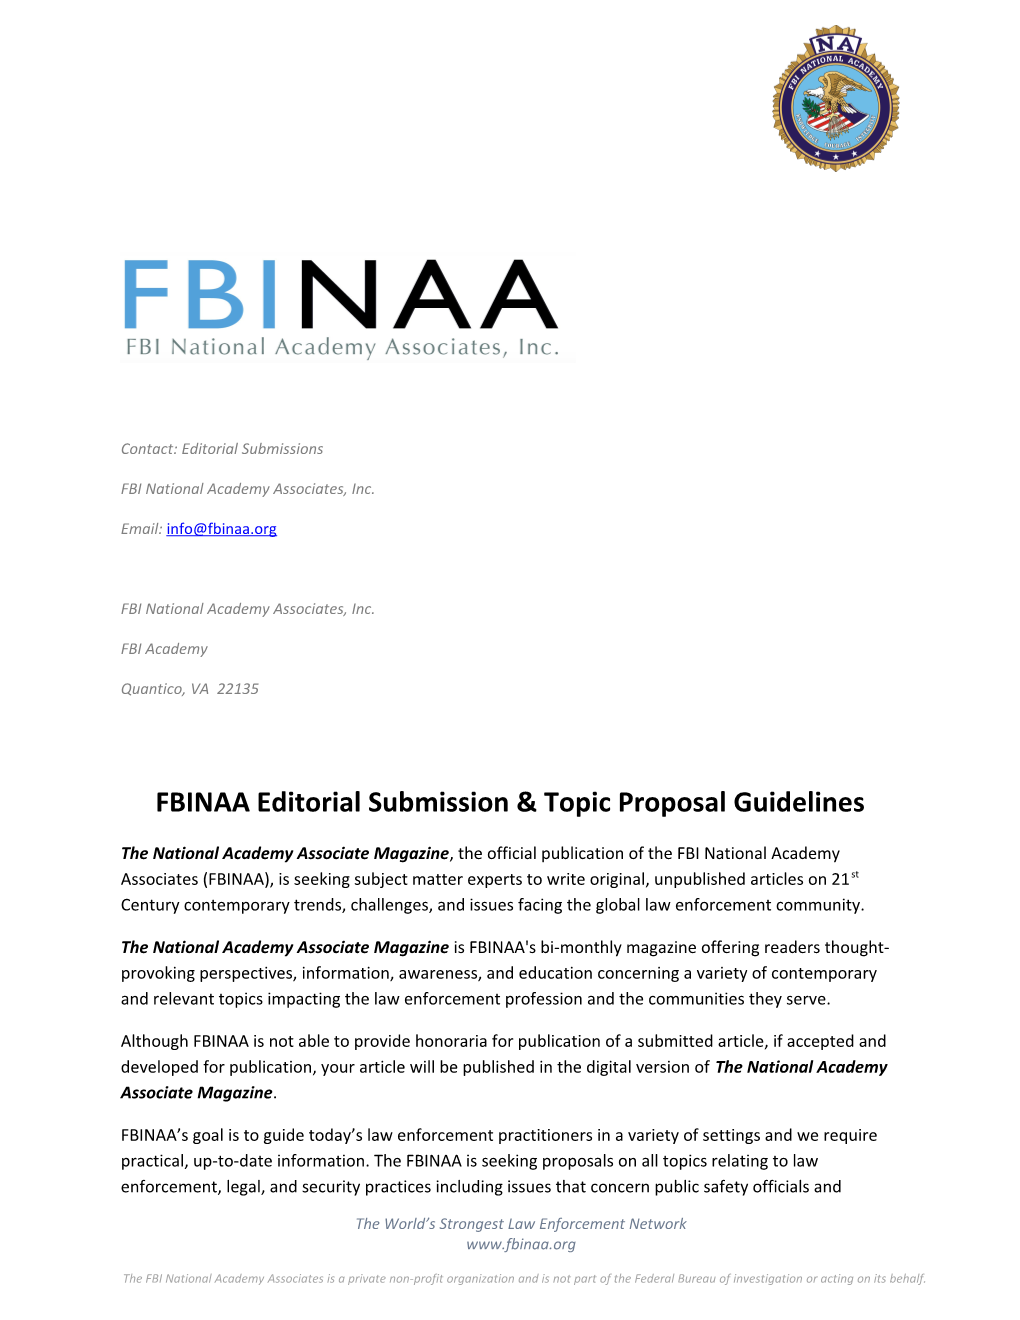 FBINAA Press Release